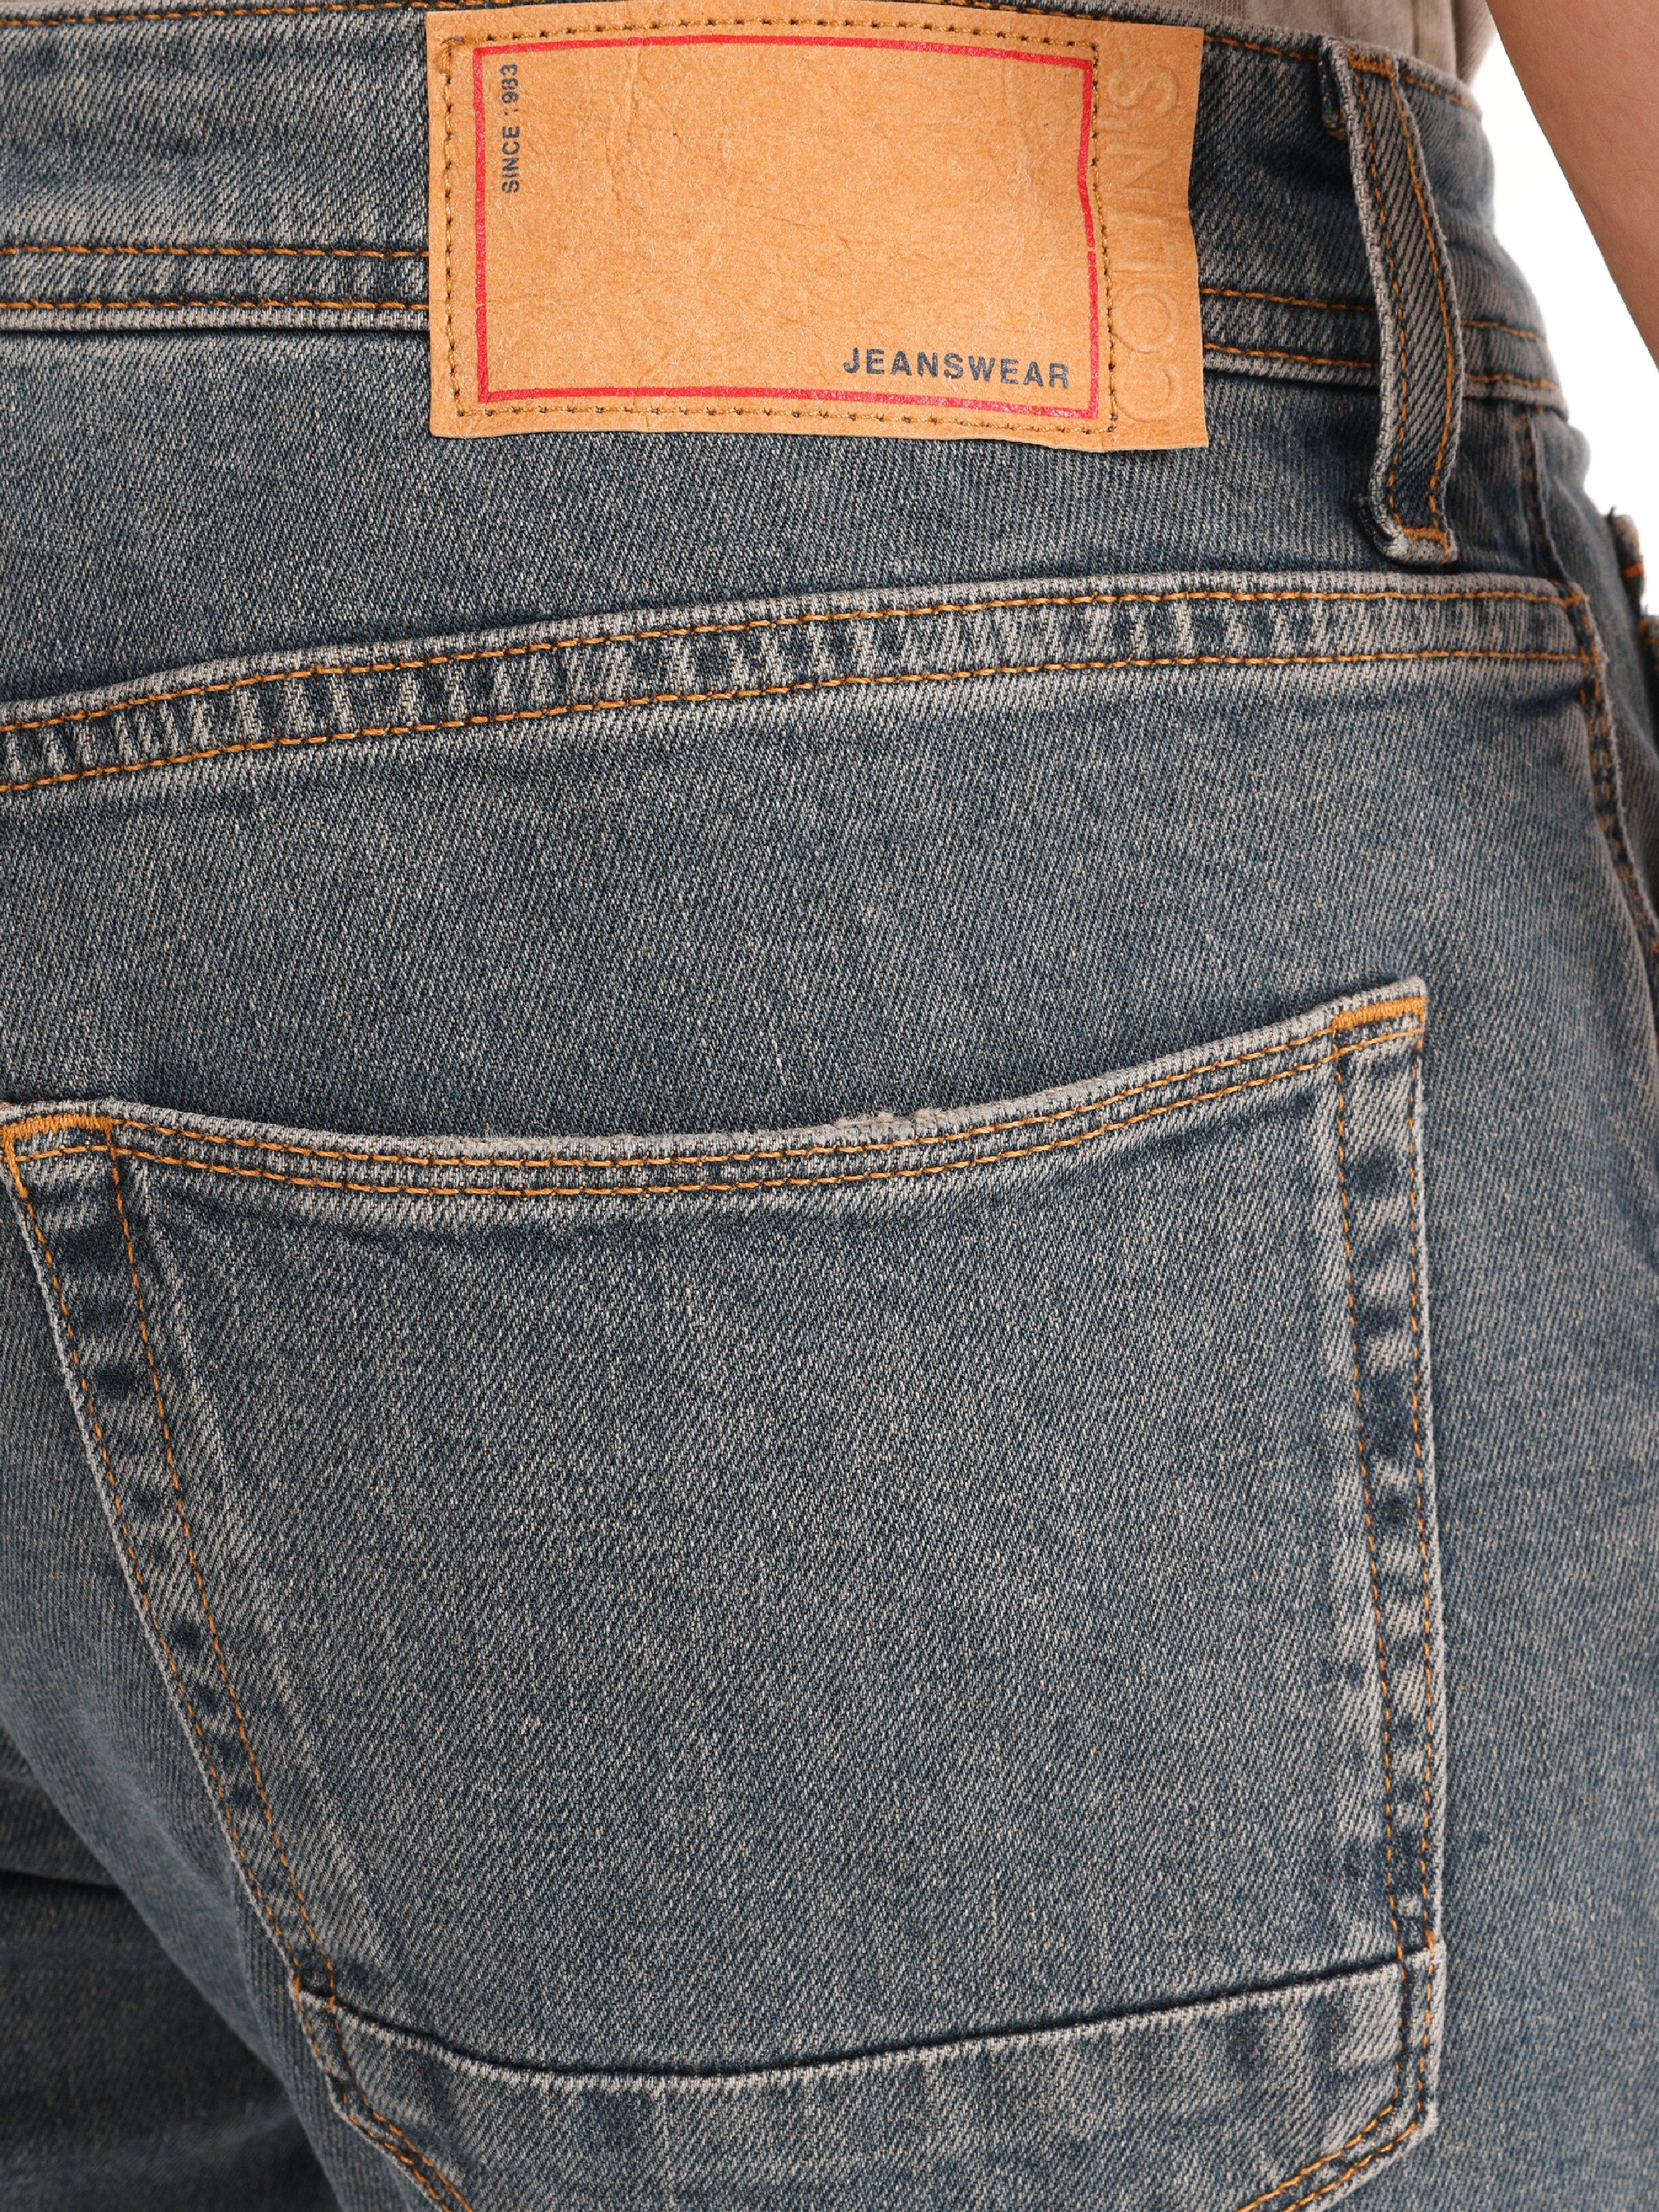 Afișați detalii pentru Pantaloni De Barbati Denim Straight Fit 044 KARL CL1065606